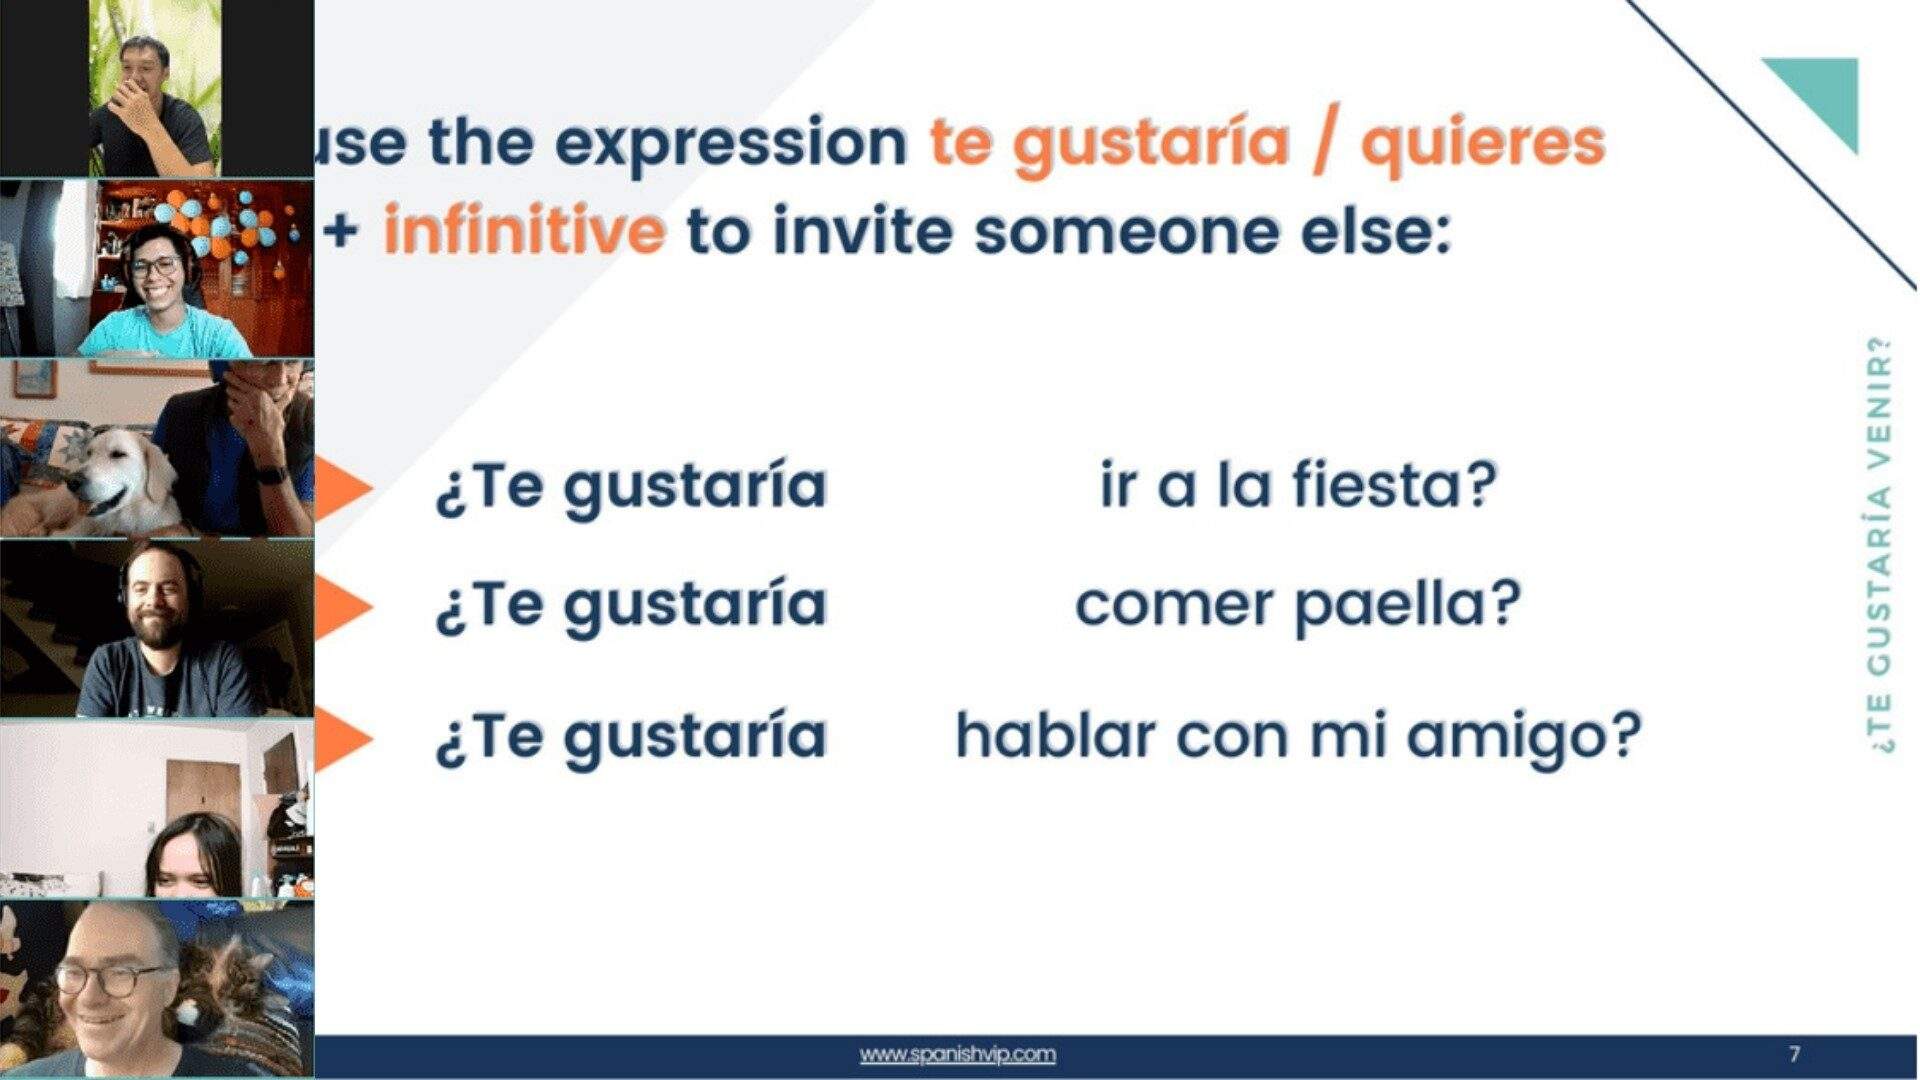 Charlas Presenciales!: free informal Spanish conversation workshops  [11/07/23]